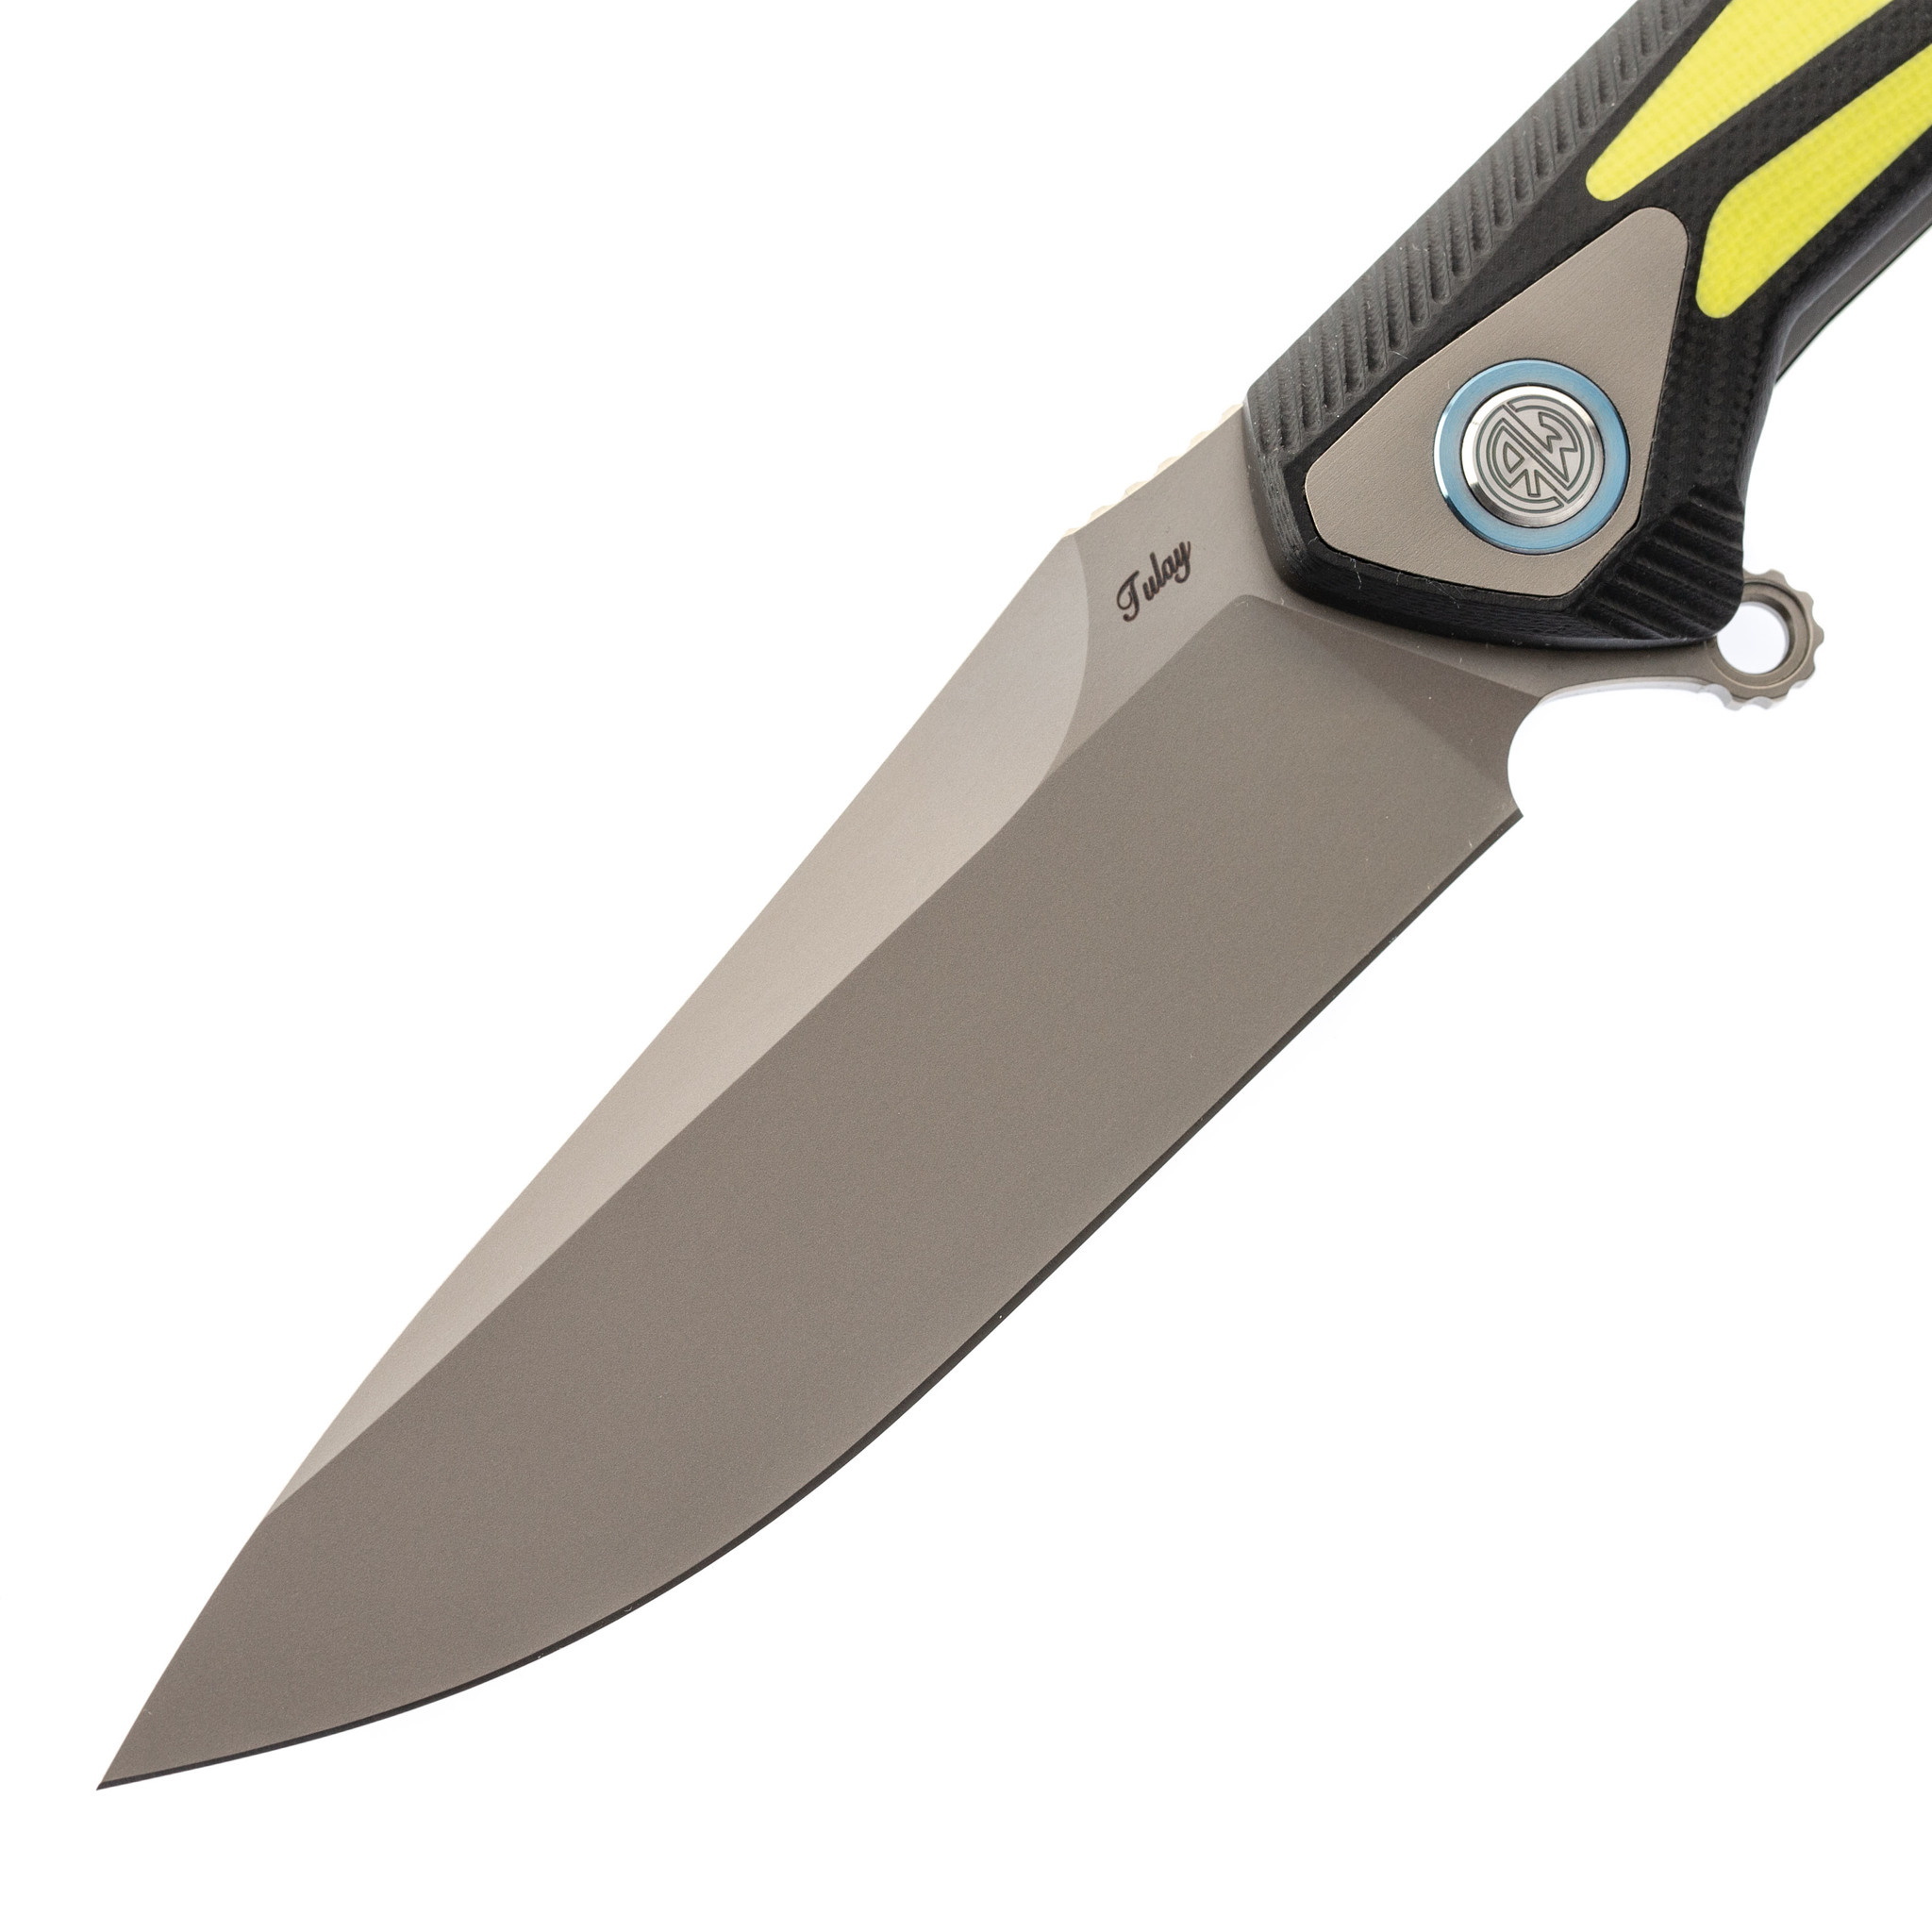 Нож складной Tulay Rikeknife, сталь 154CM, Yellow G10 - фото 2